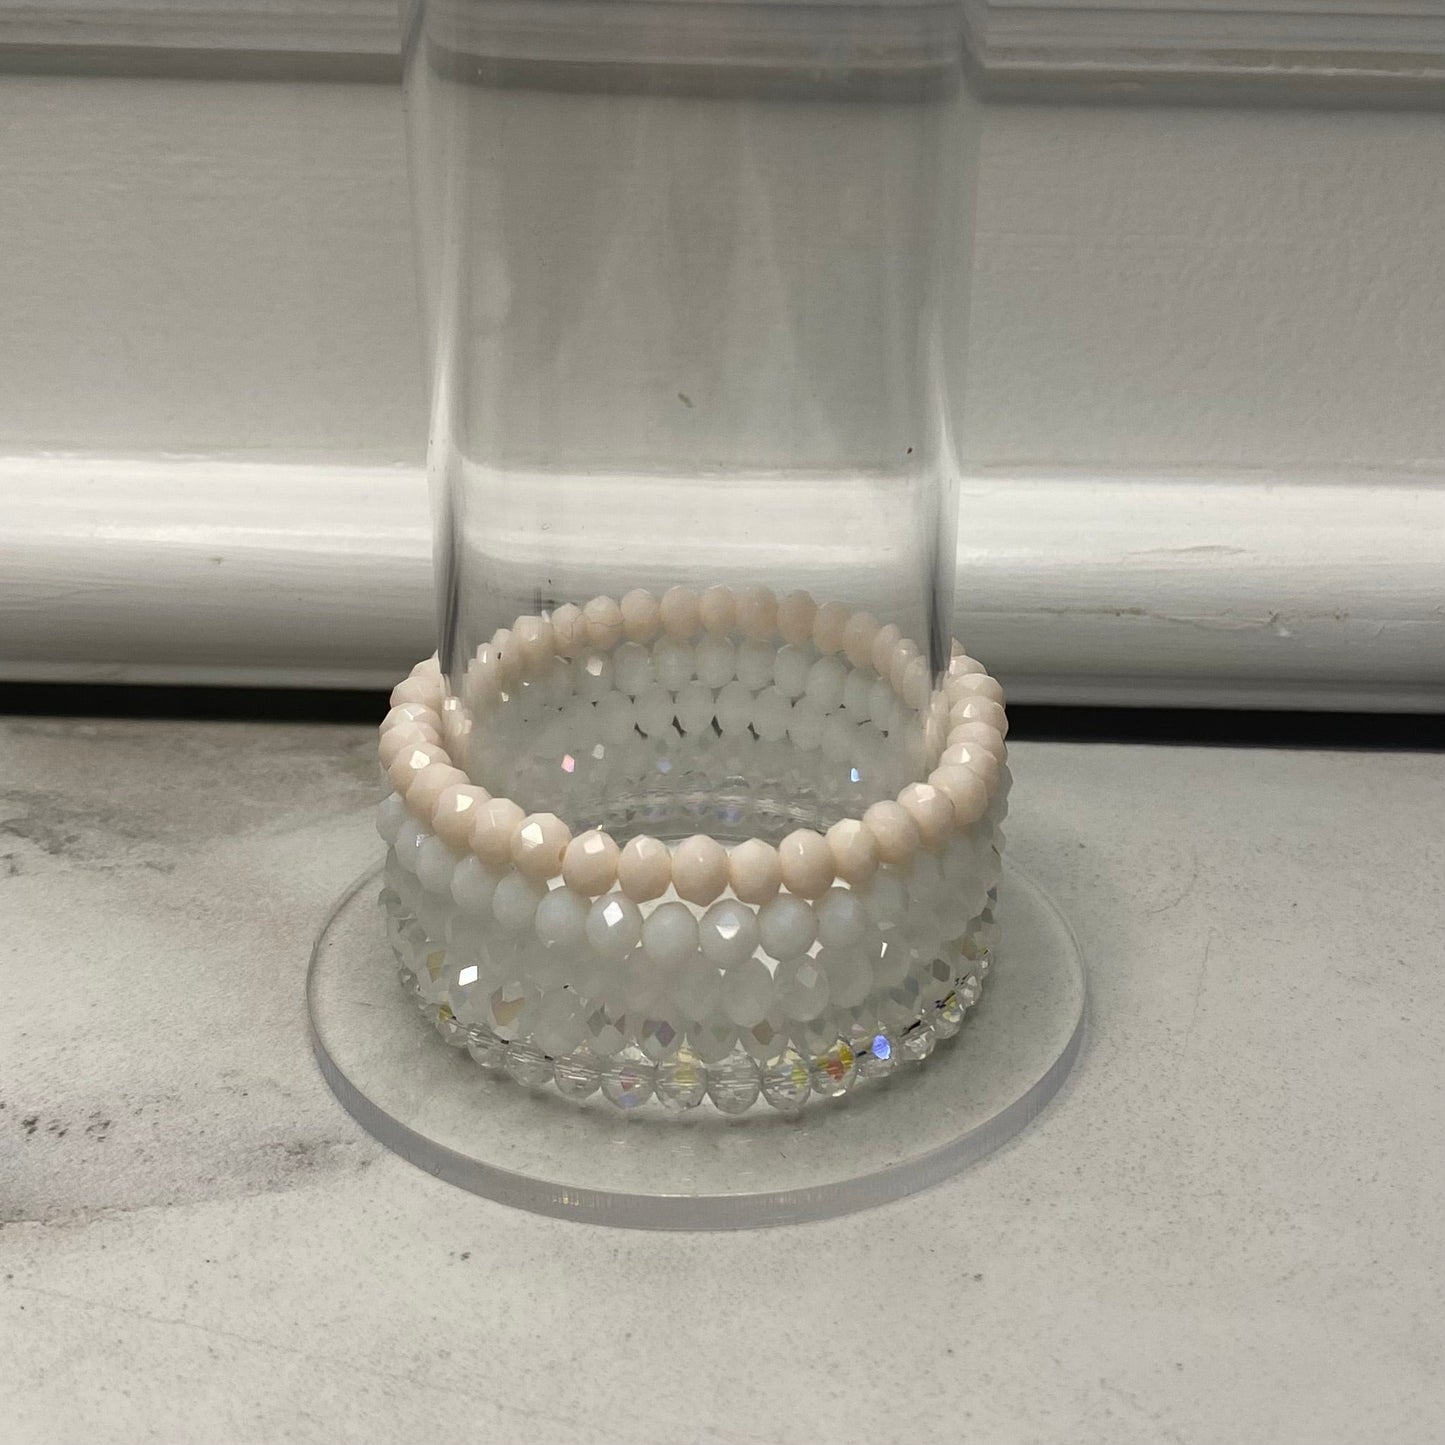 Bracelet - Small Sized Bead